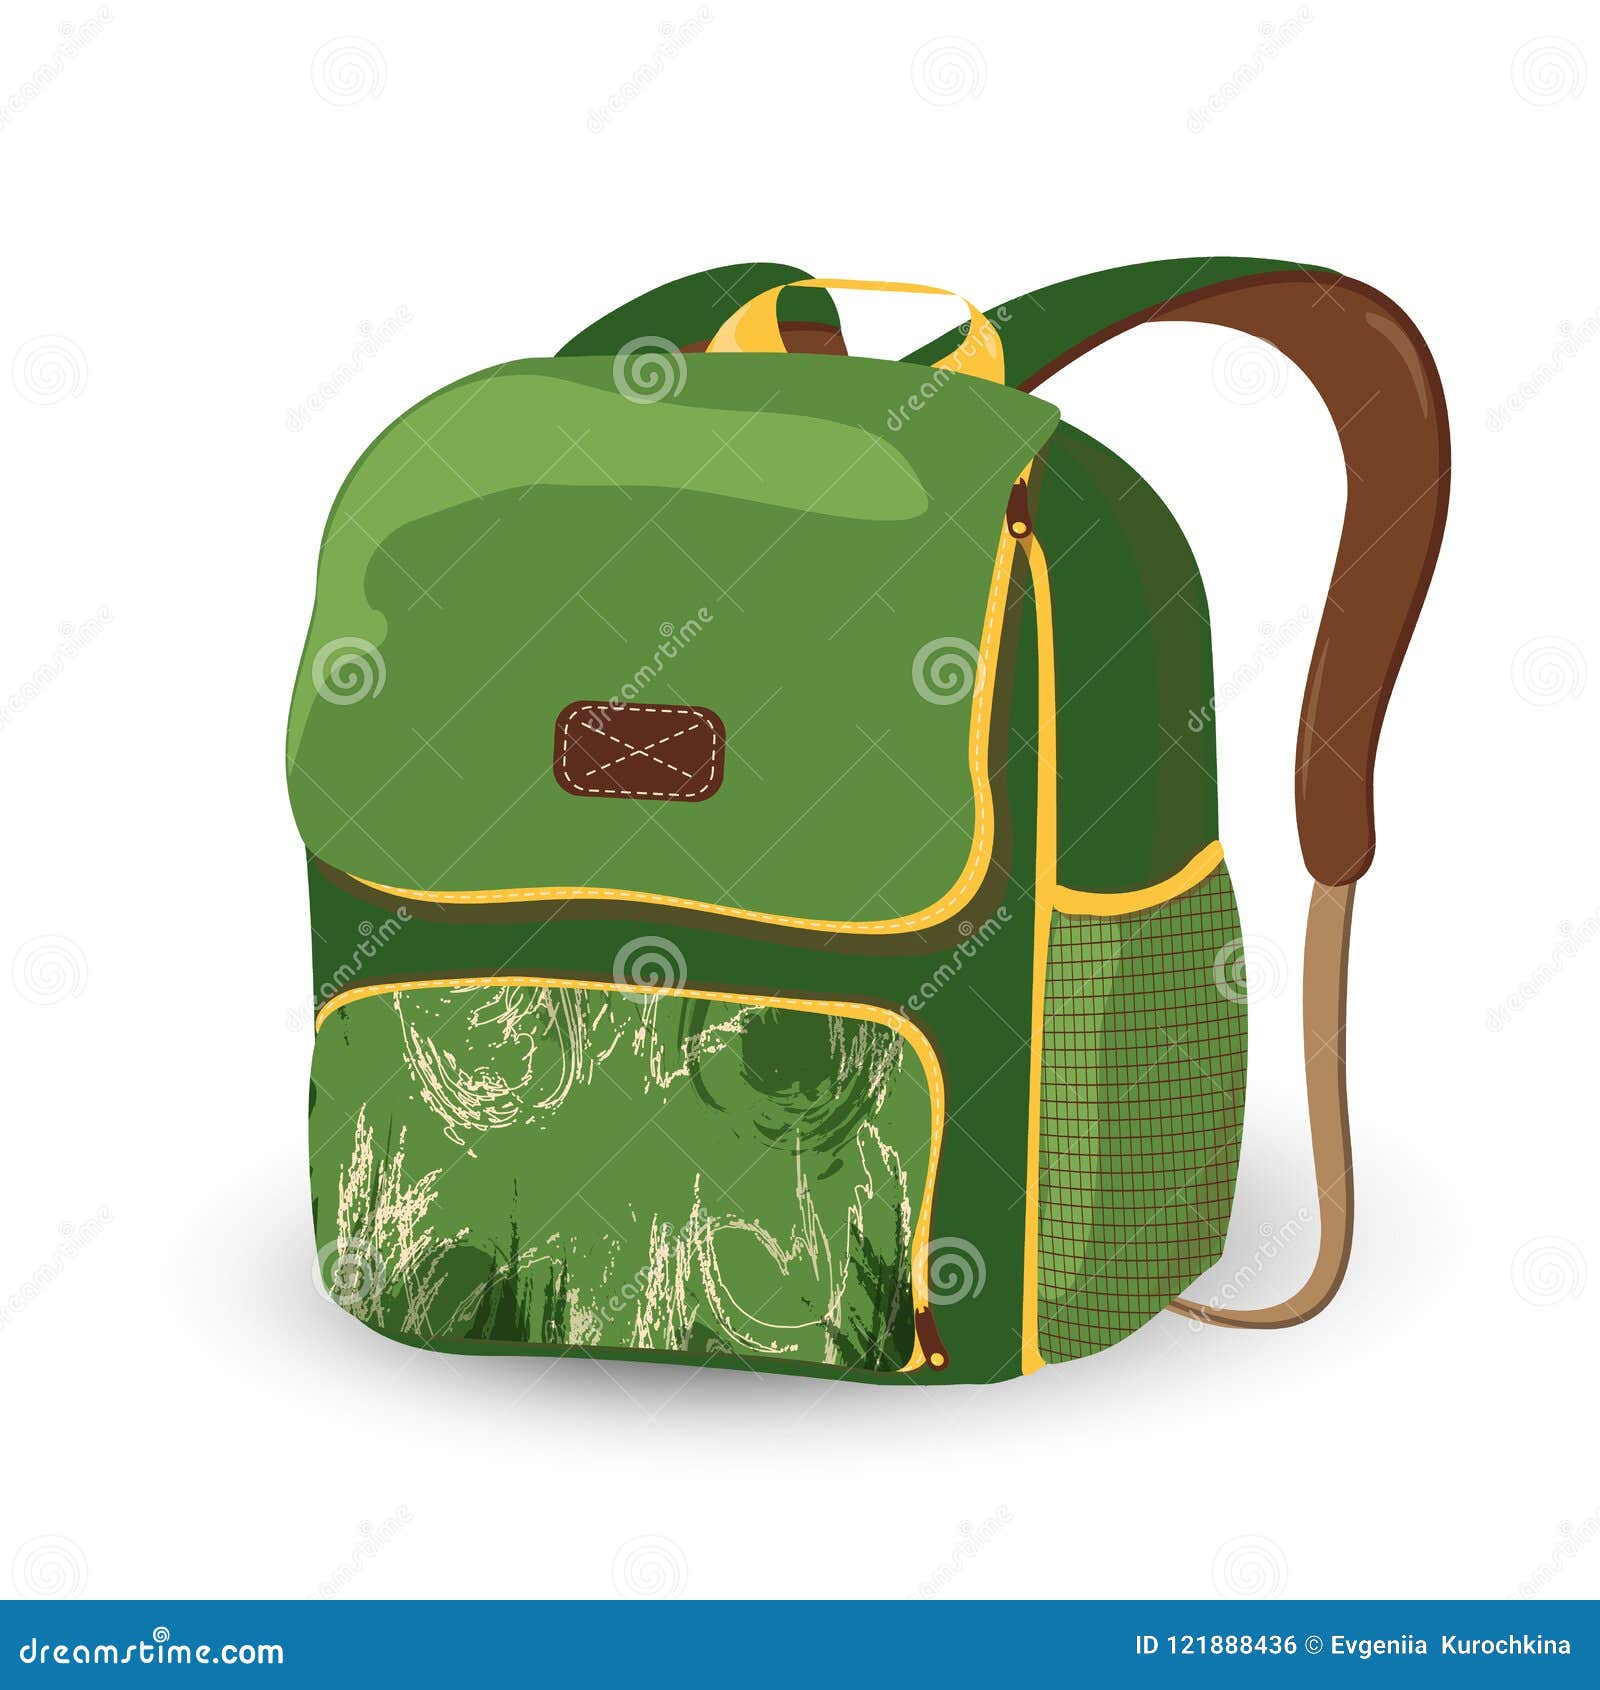 Premium Vector  This cartoon clipart shows a school bag illustration